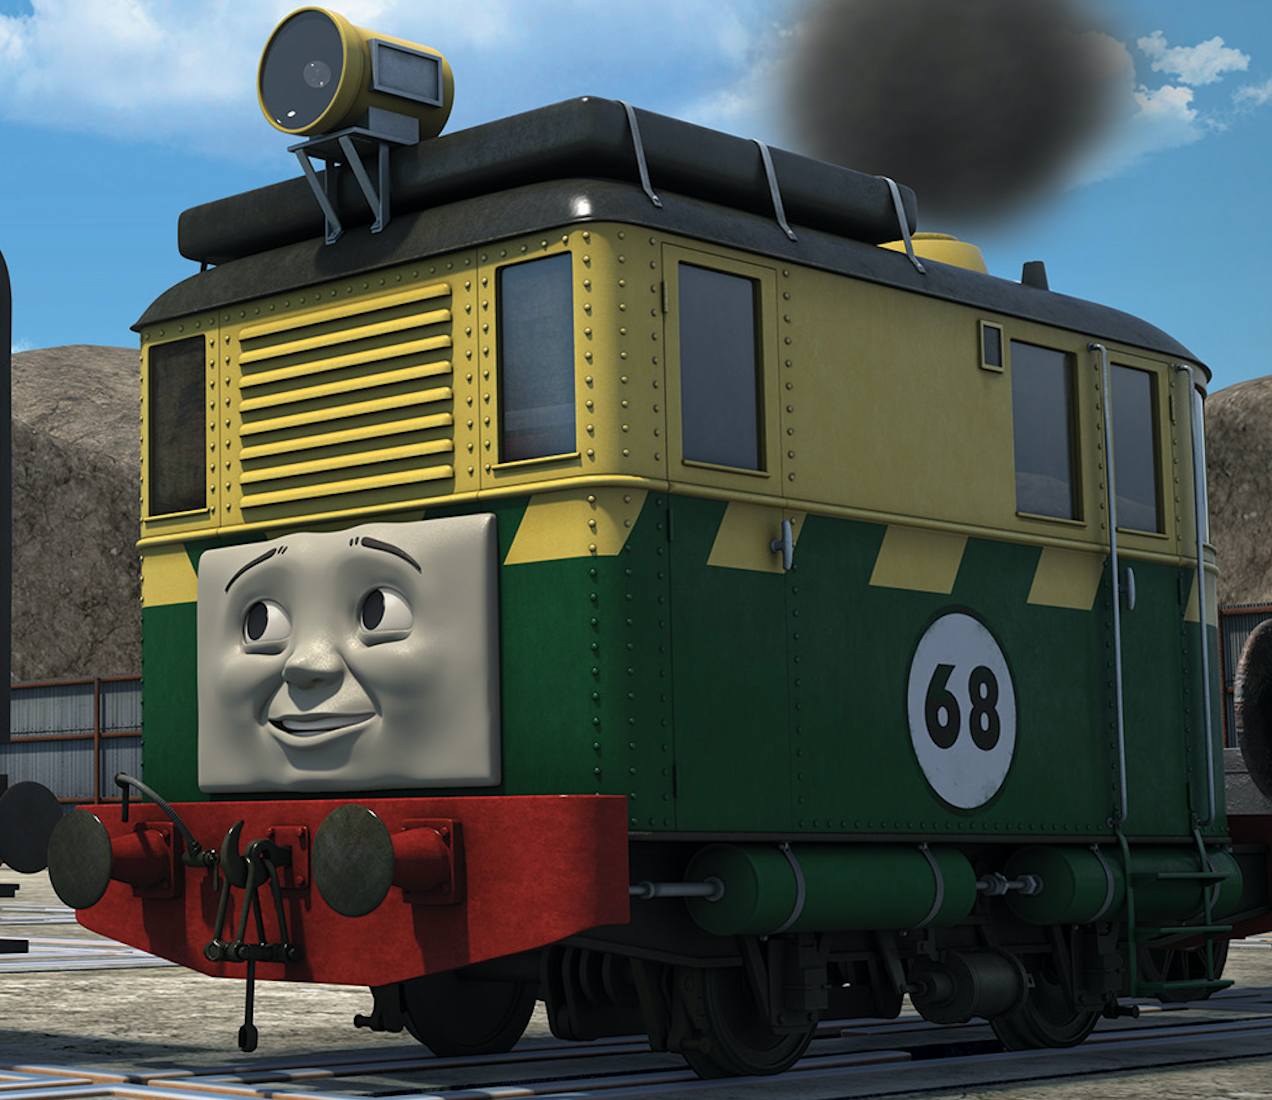 thomas train 68